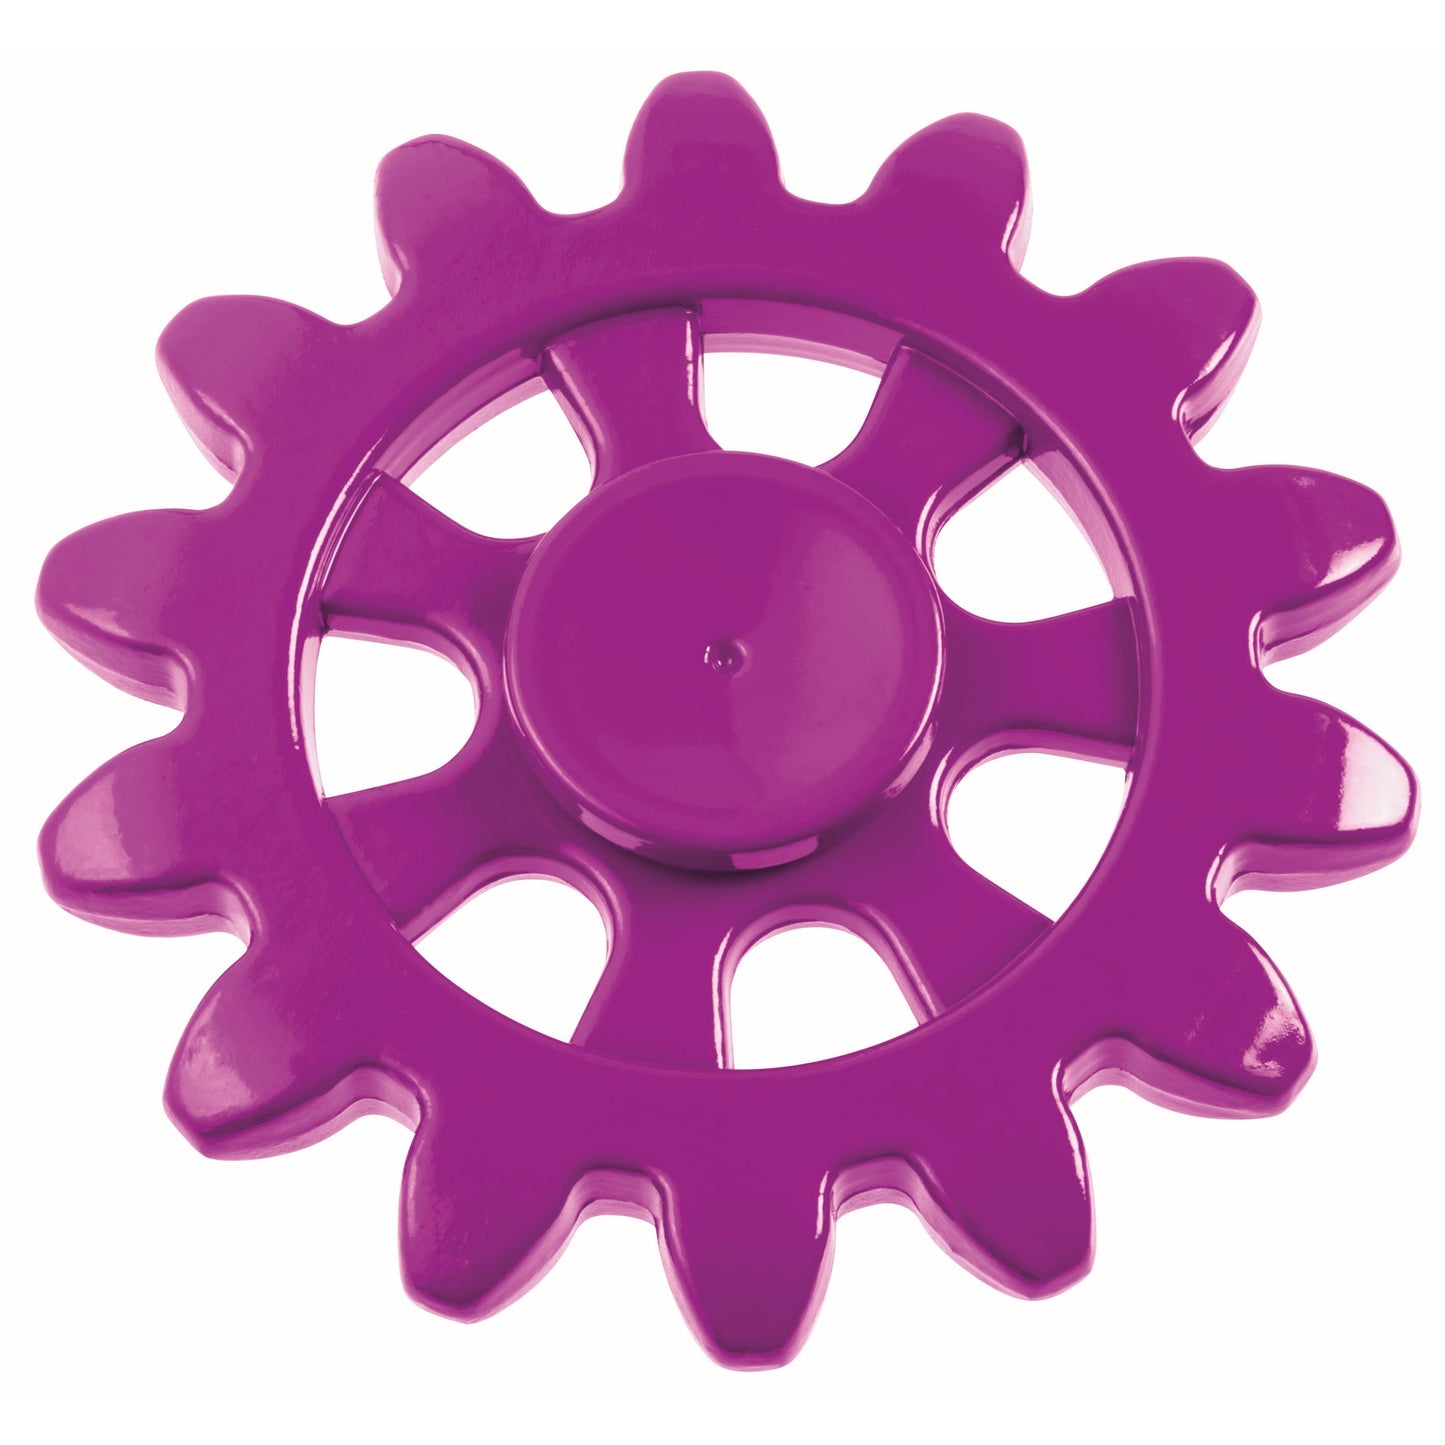 Close up image of one “Cog-Nitive” Fidget Toy.